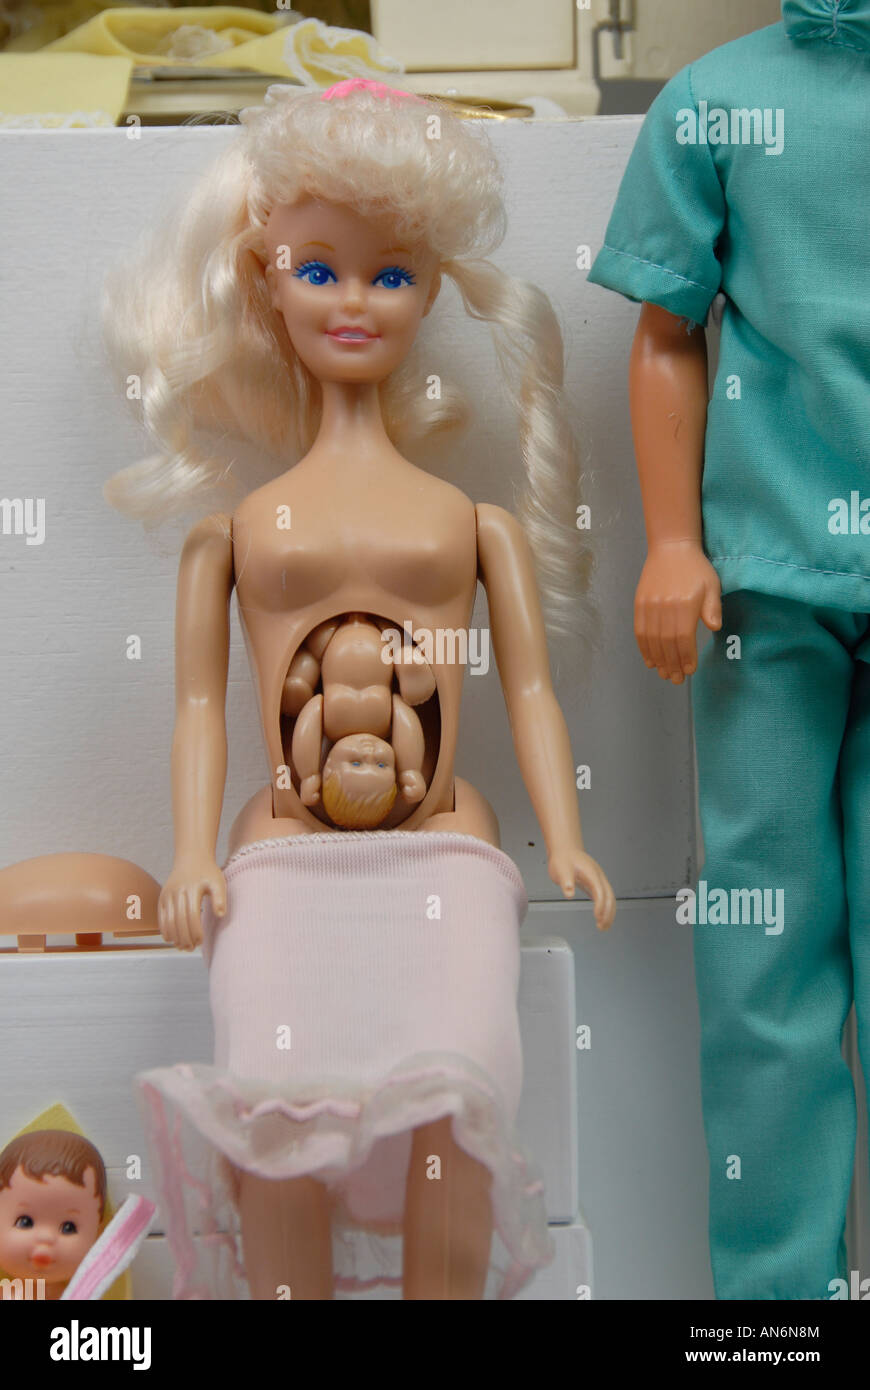 midge the pregnant barbie